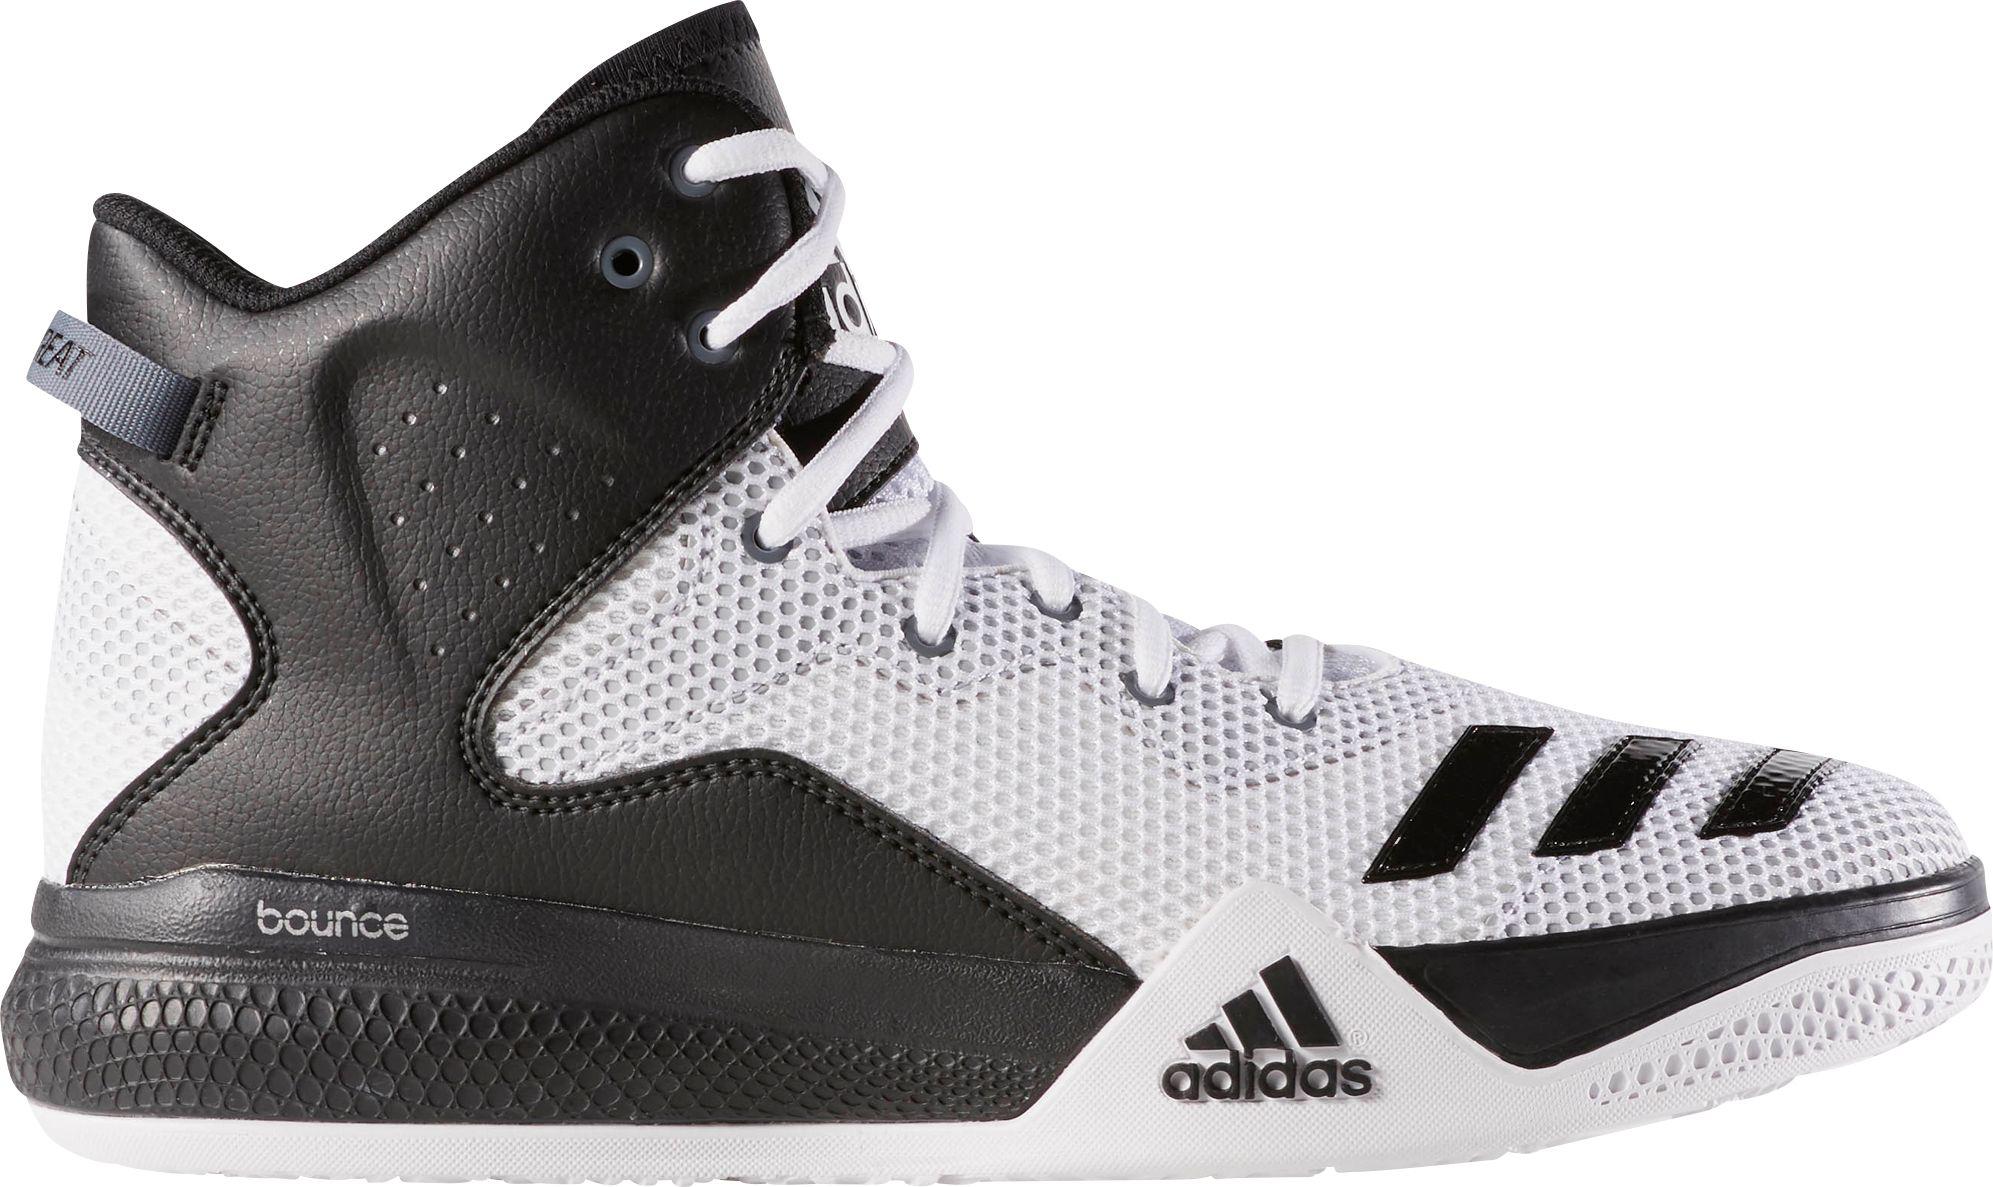 adidas dual threat basketball shoes